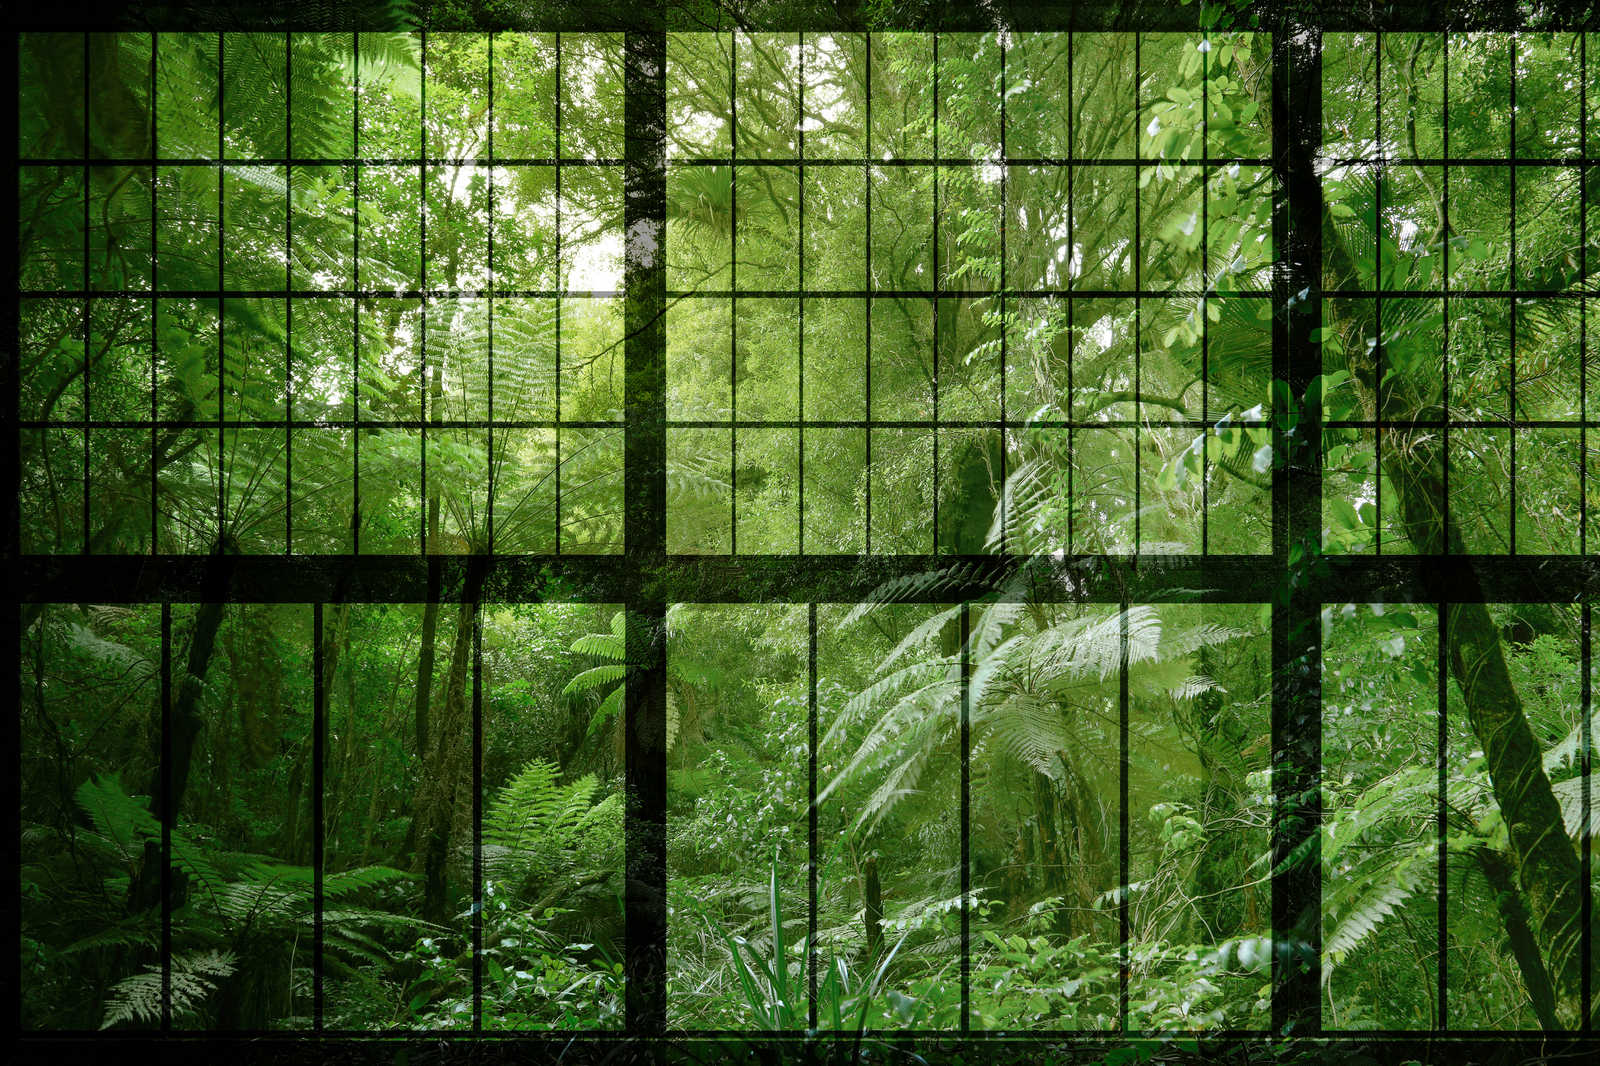             Rainforest 2 - Loftfenster Leinwandbild mit Dschungel Aussicht – 0,90 m x 0,60 m
        